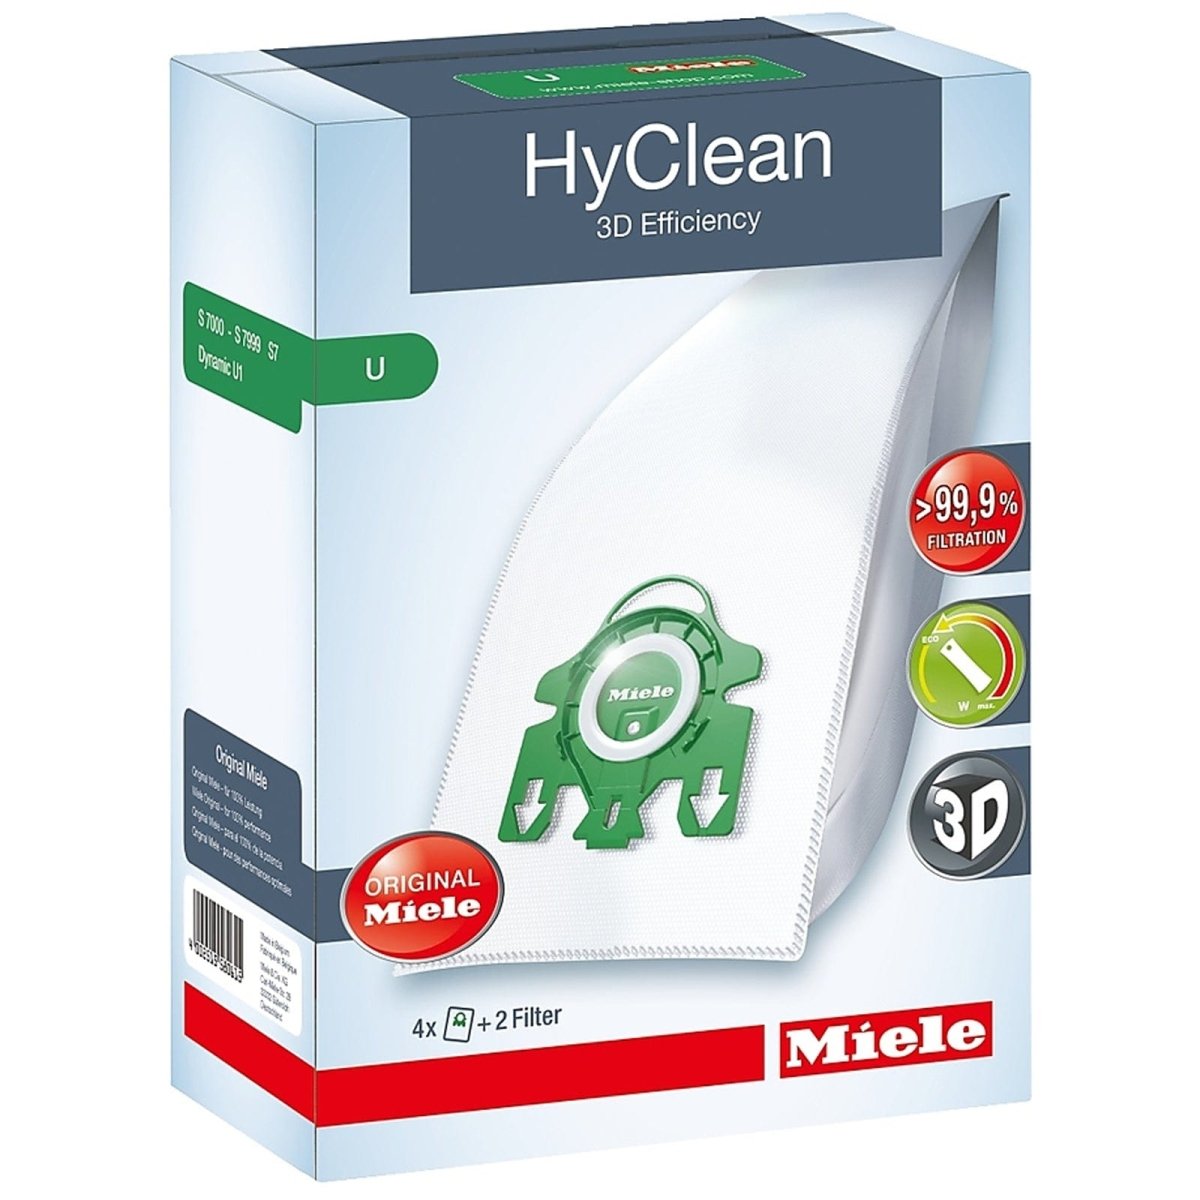 Miele HyClean 3D Efficiency U Dust Bag Pack (4 Dust Bags + 2 Filters) For Upright Vacuum Cleaners | Atlantic Electrics